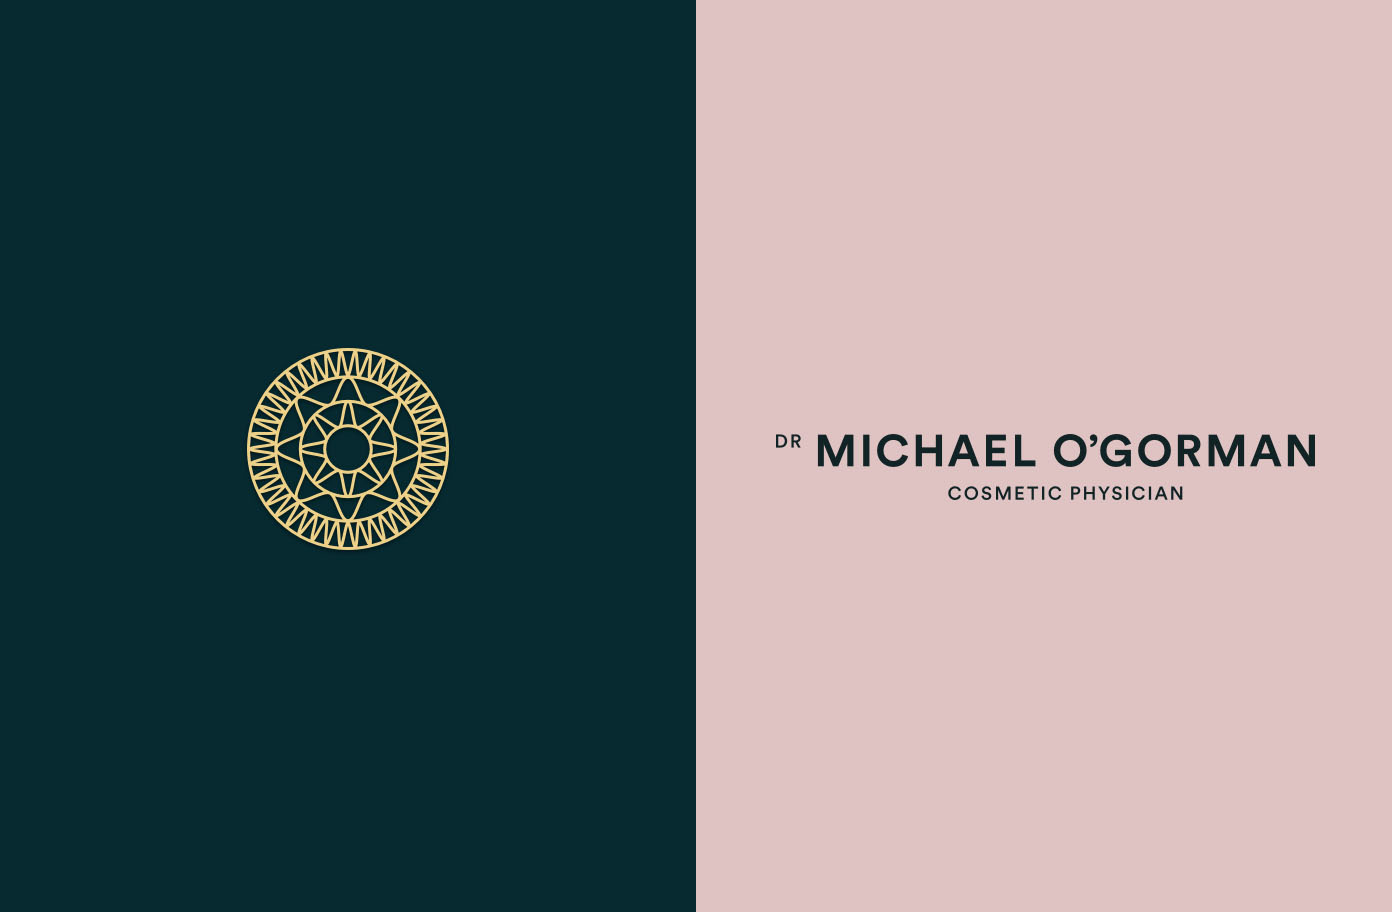 Brandmark and logo – Dr Michael O'Gorman